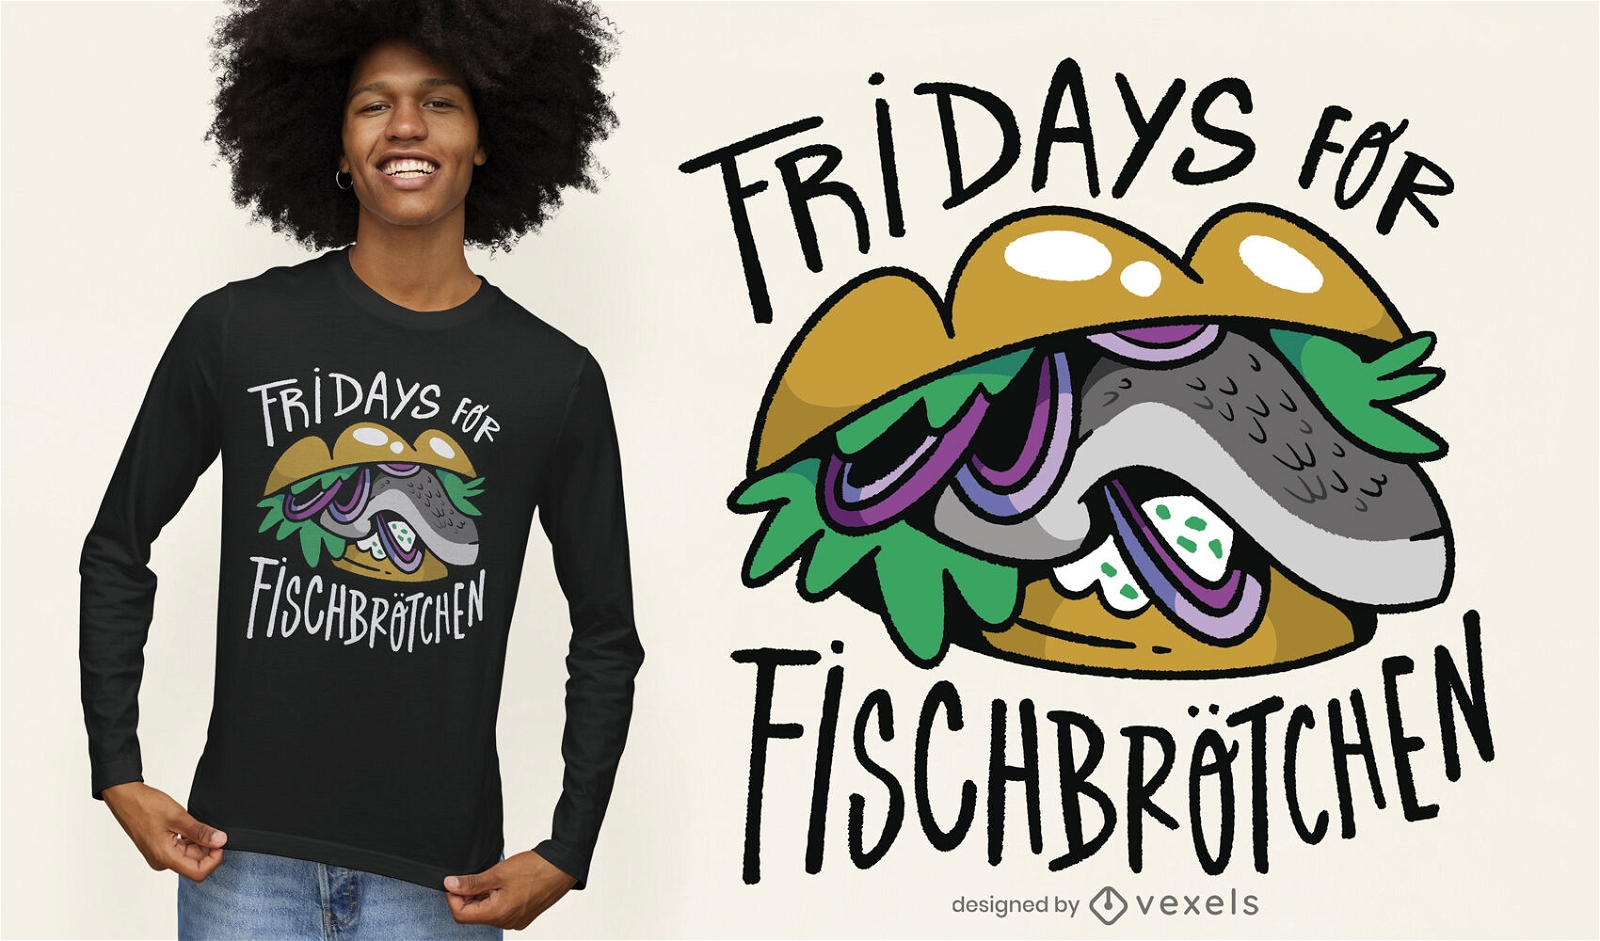 Fishbread german food t-shirt design